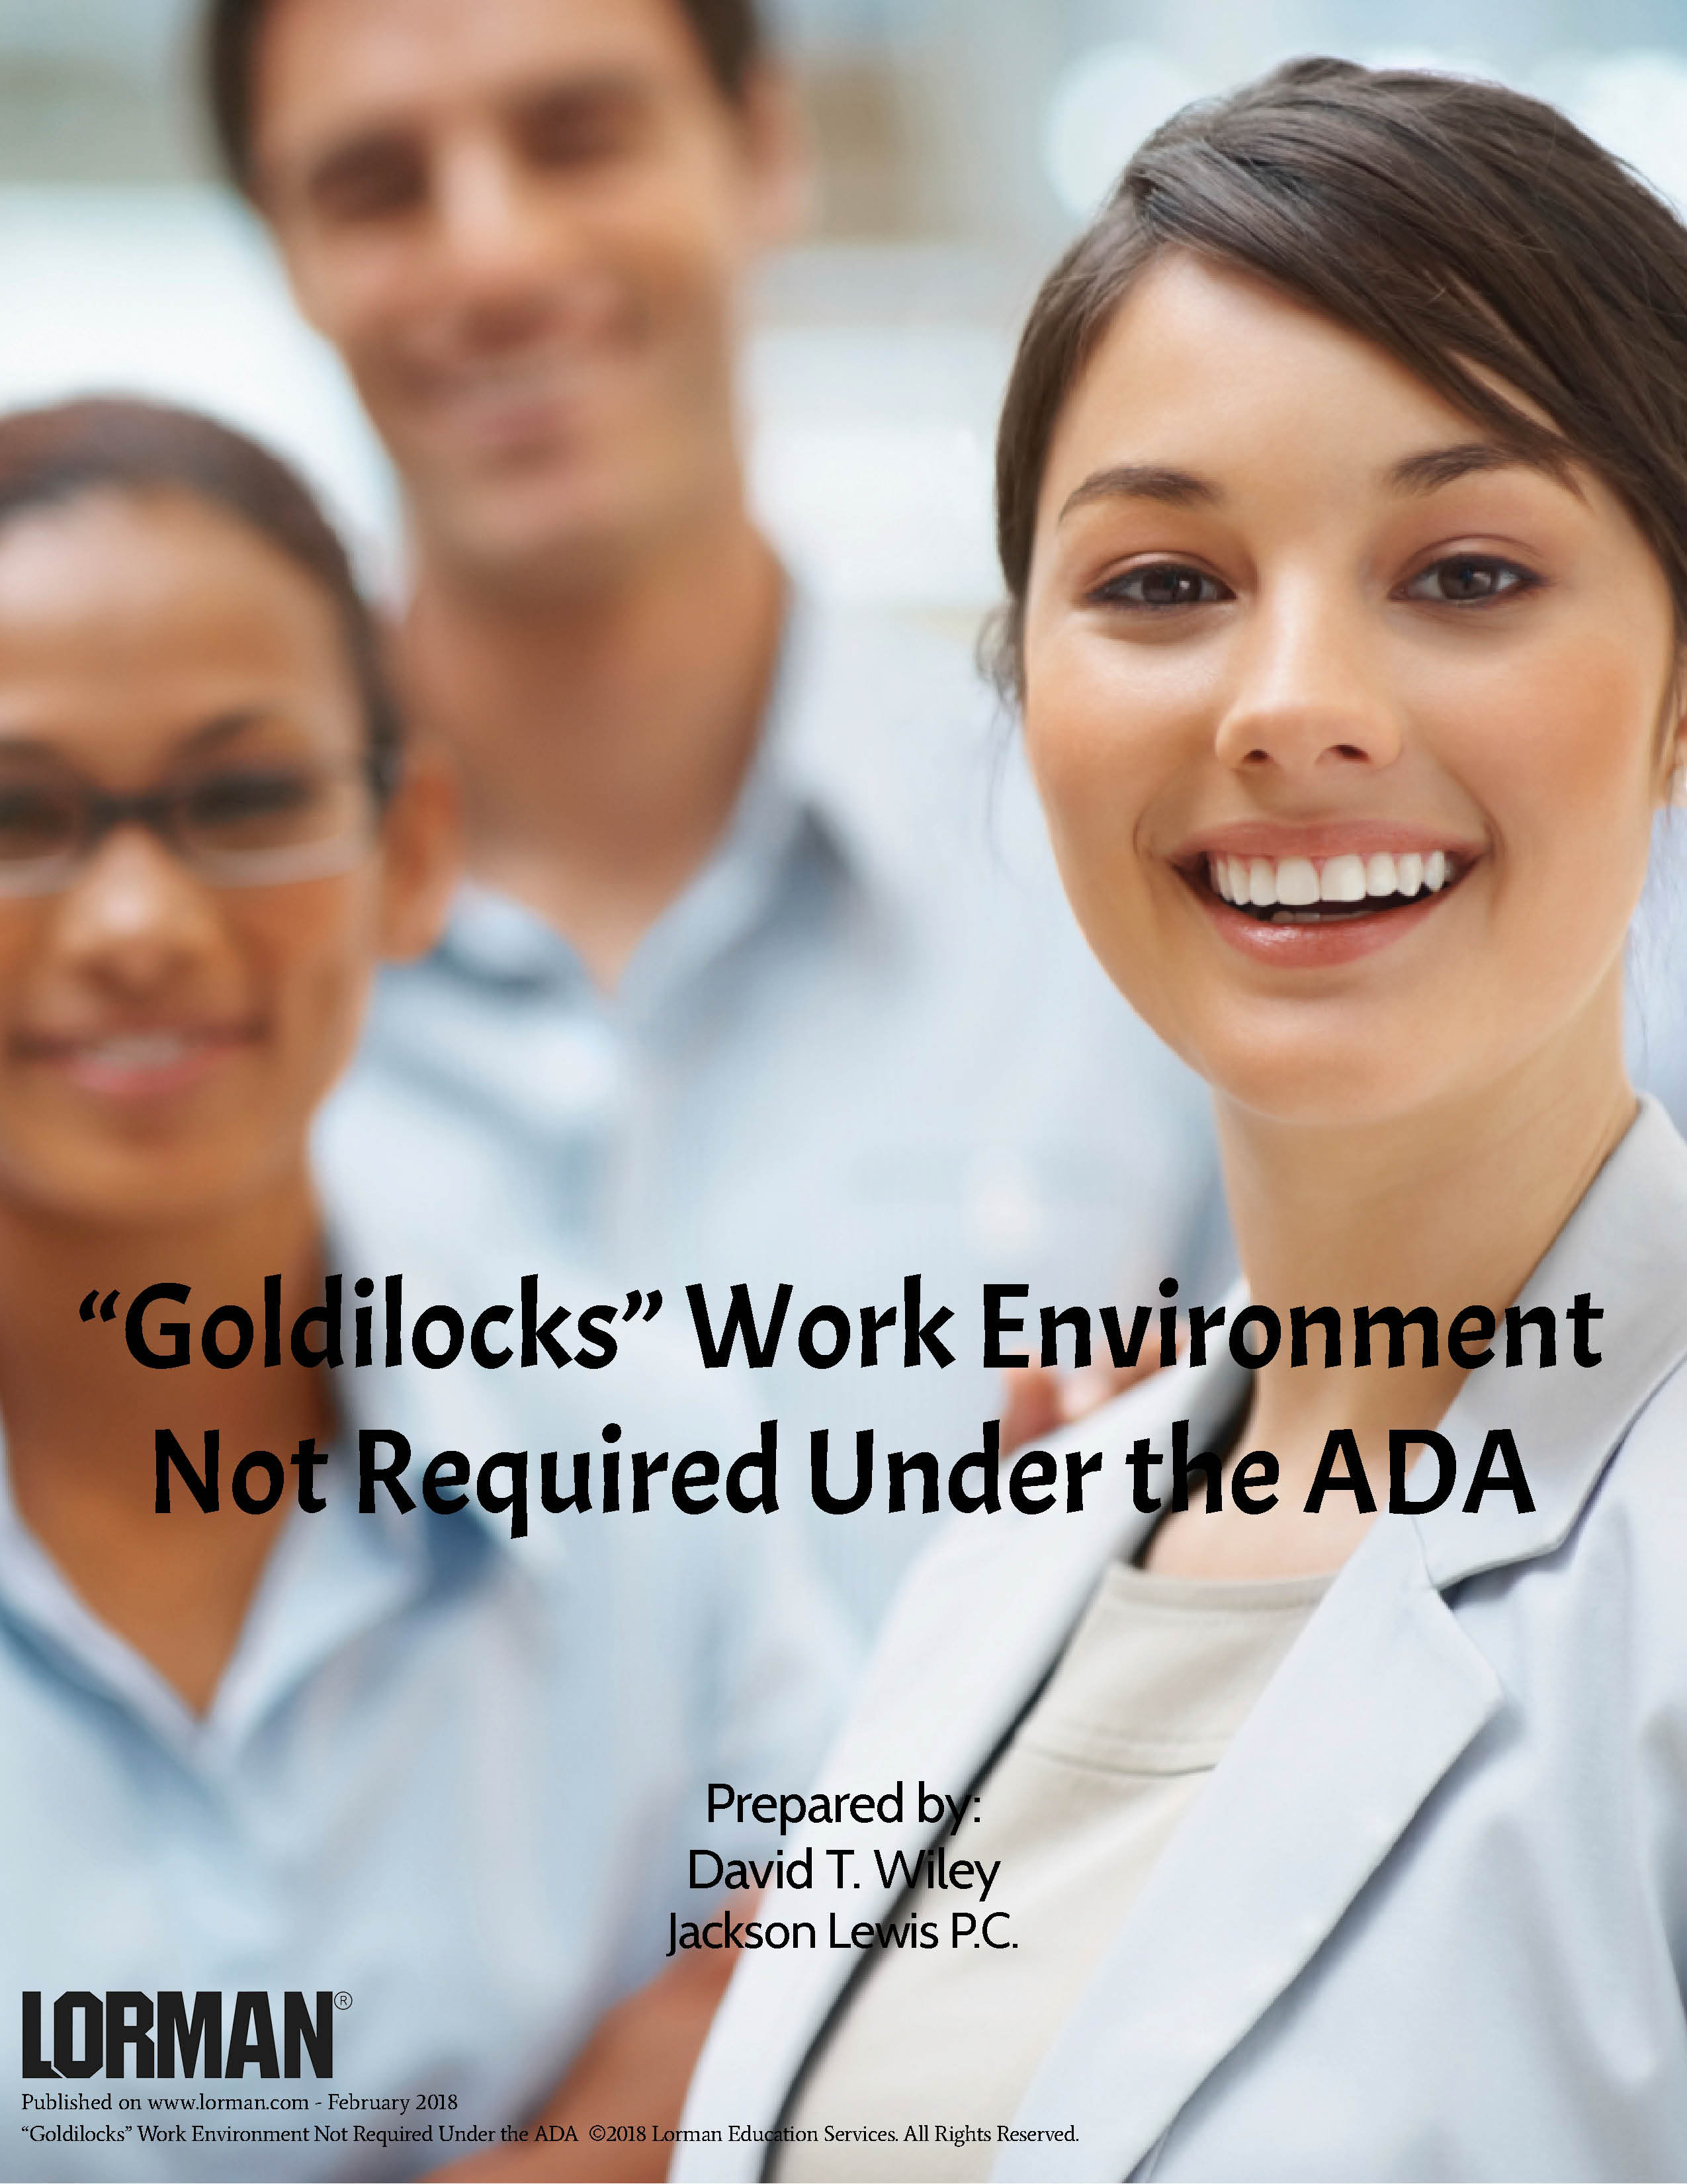 “Goldilocks” Work Environment Not Required Under the ADA